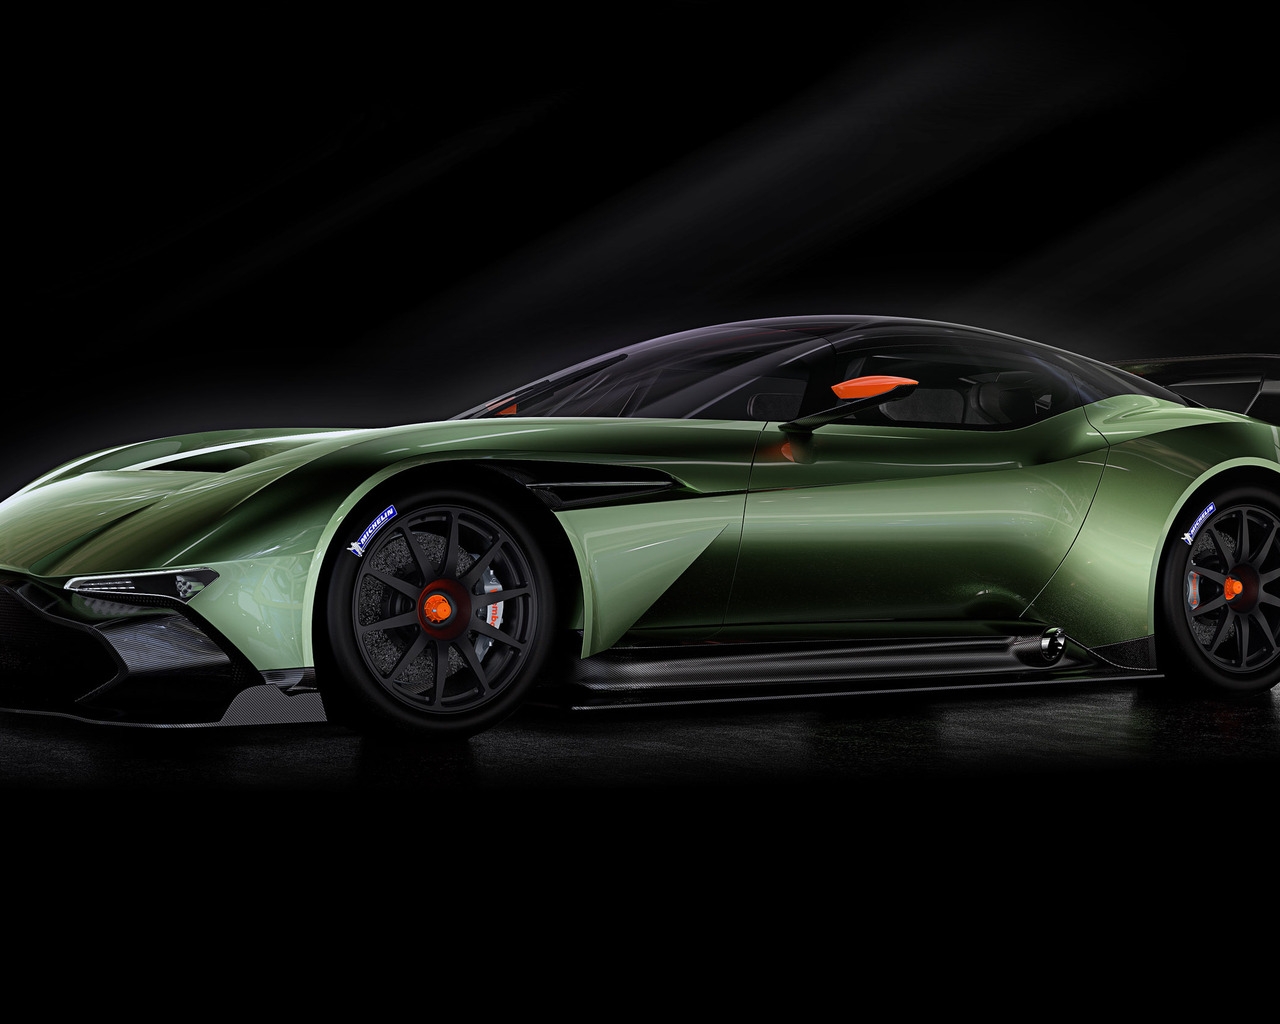 Aston Martin Vulcan Side for 1280 x 1024 resolution